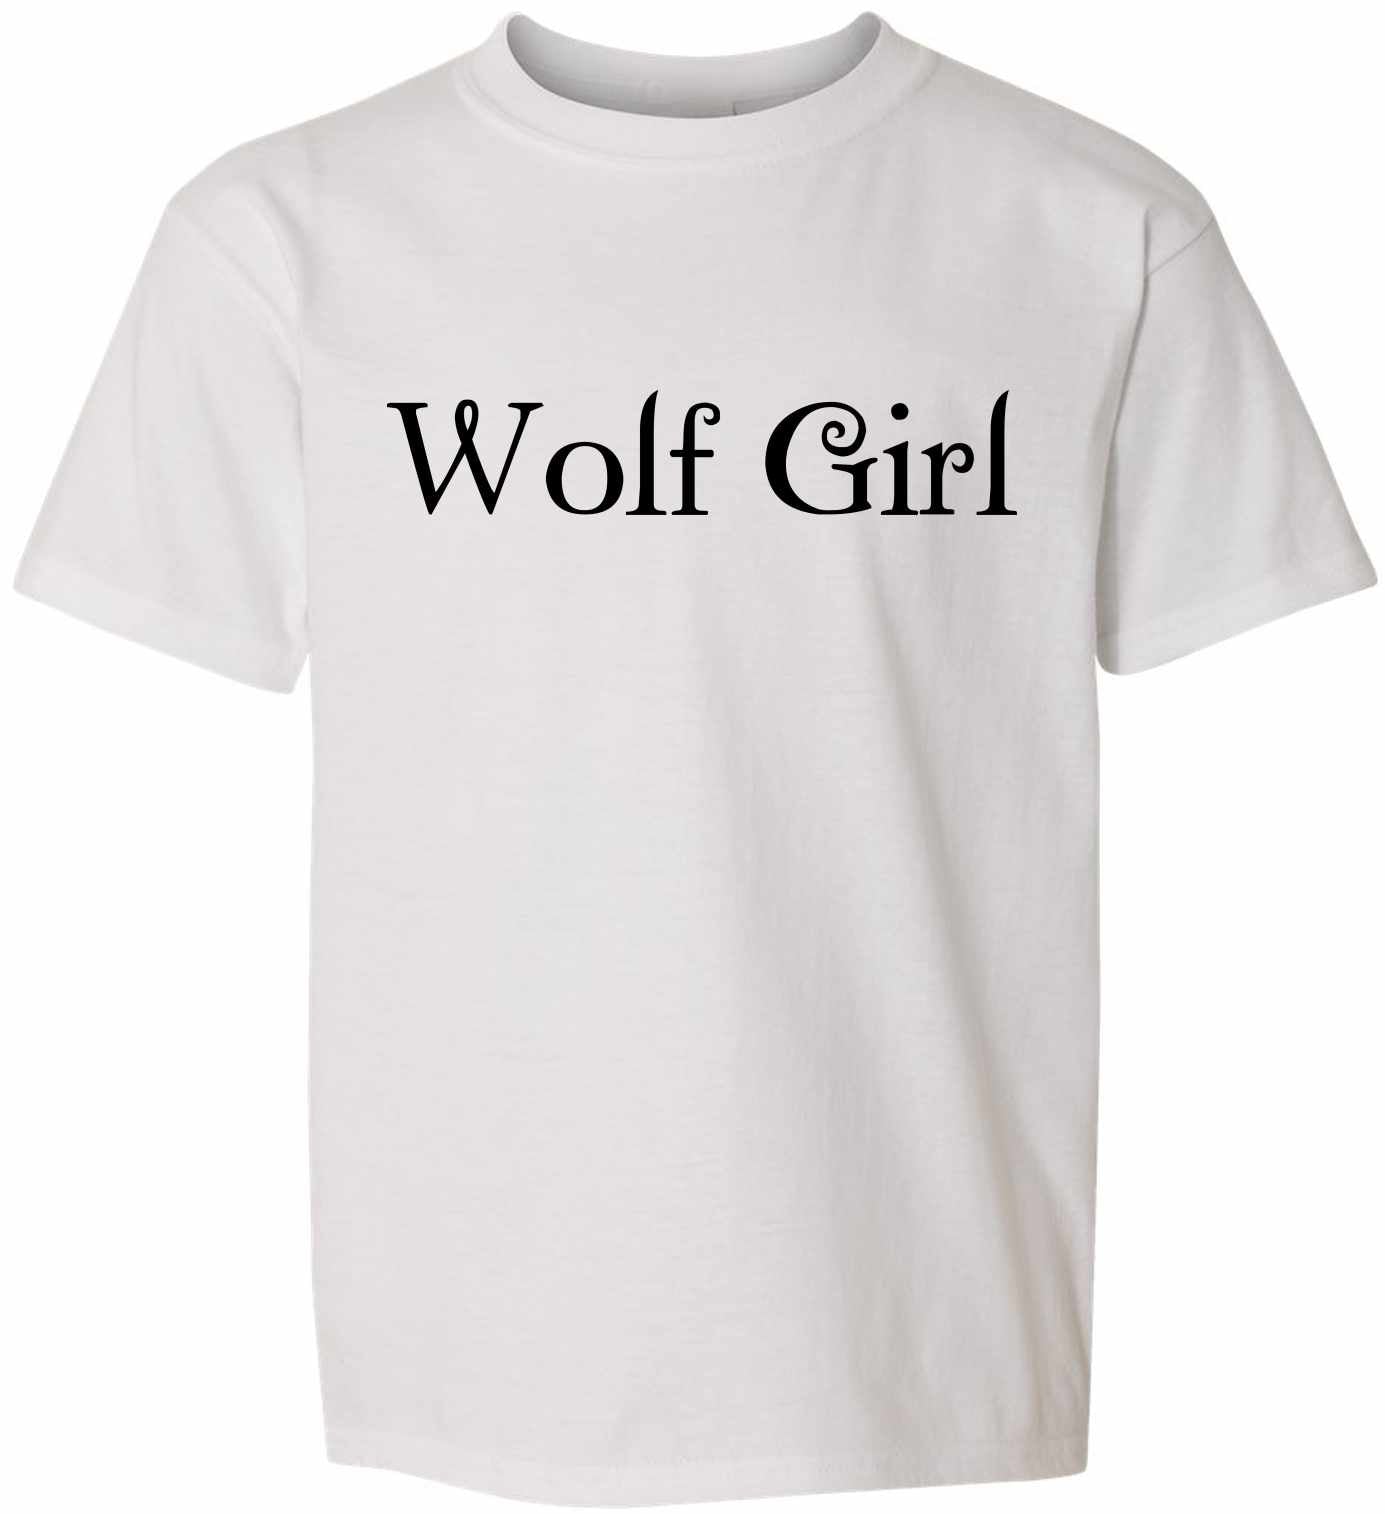 Wolf Girl on Kids T-Shirt